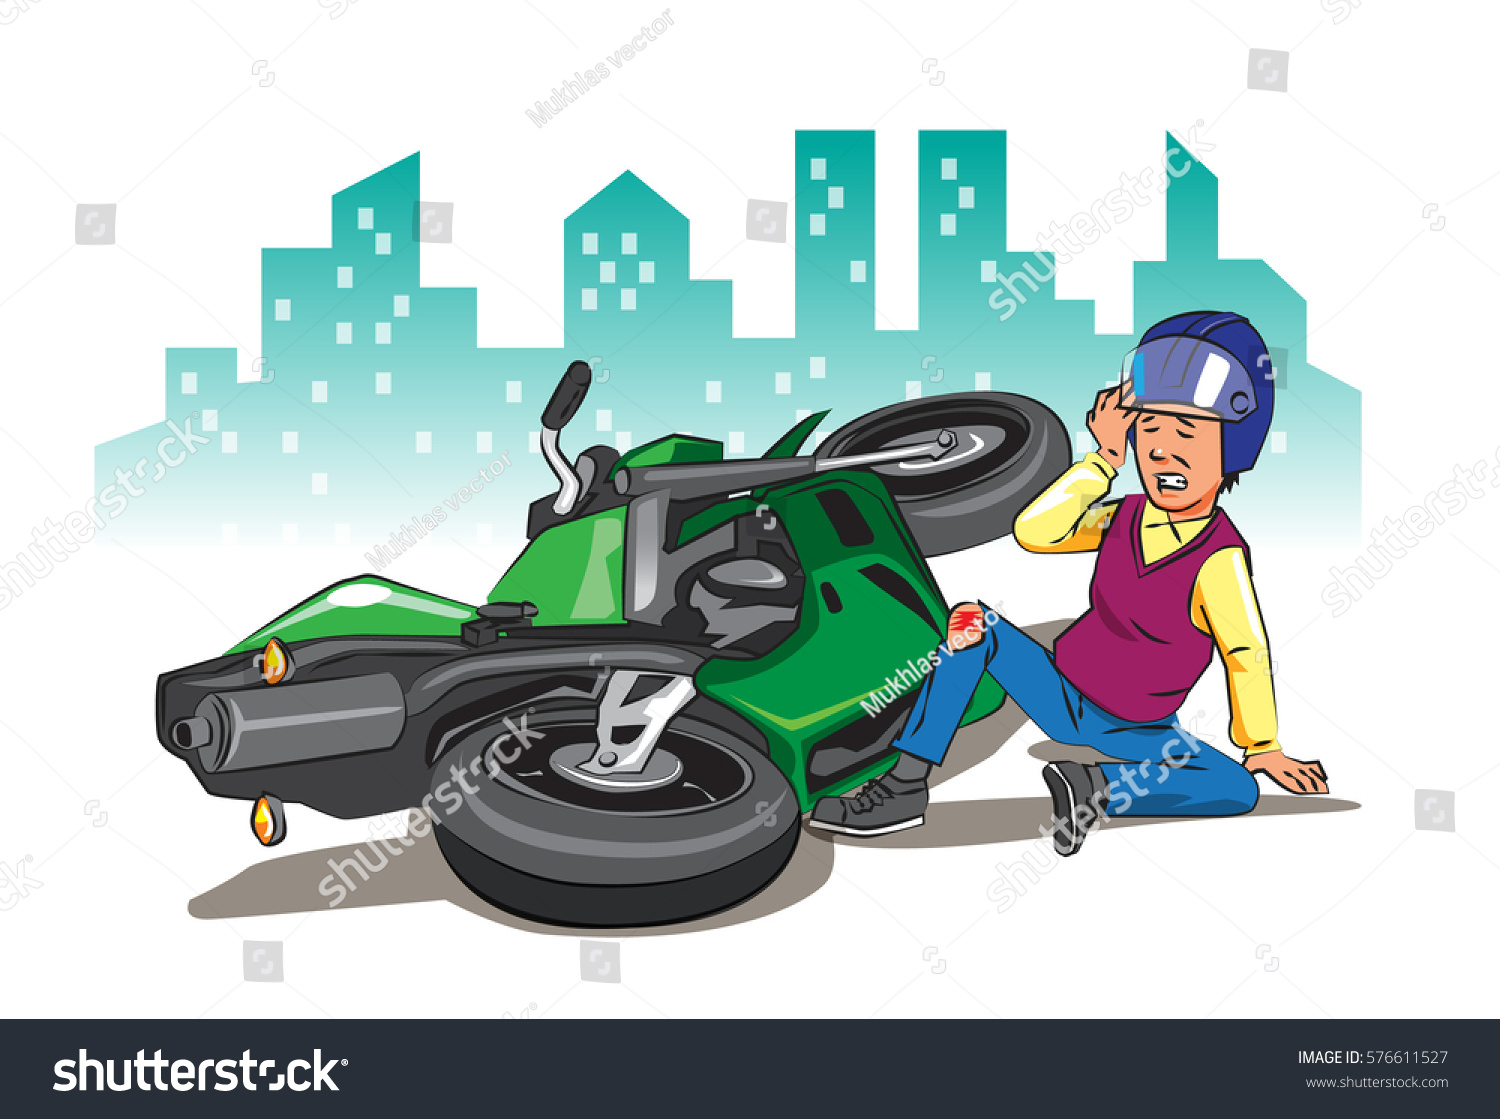 Рисунок автокатастрофа на мотоцикле